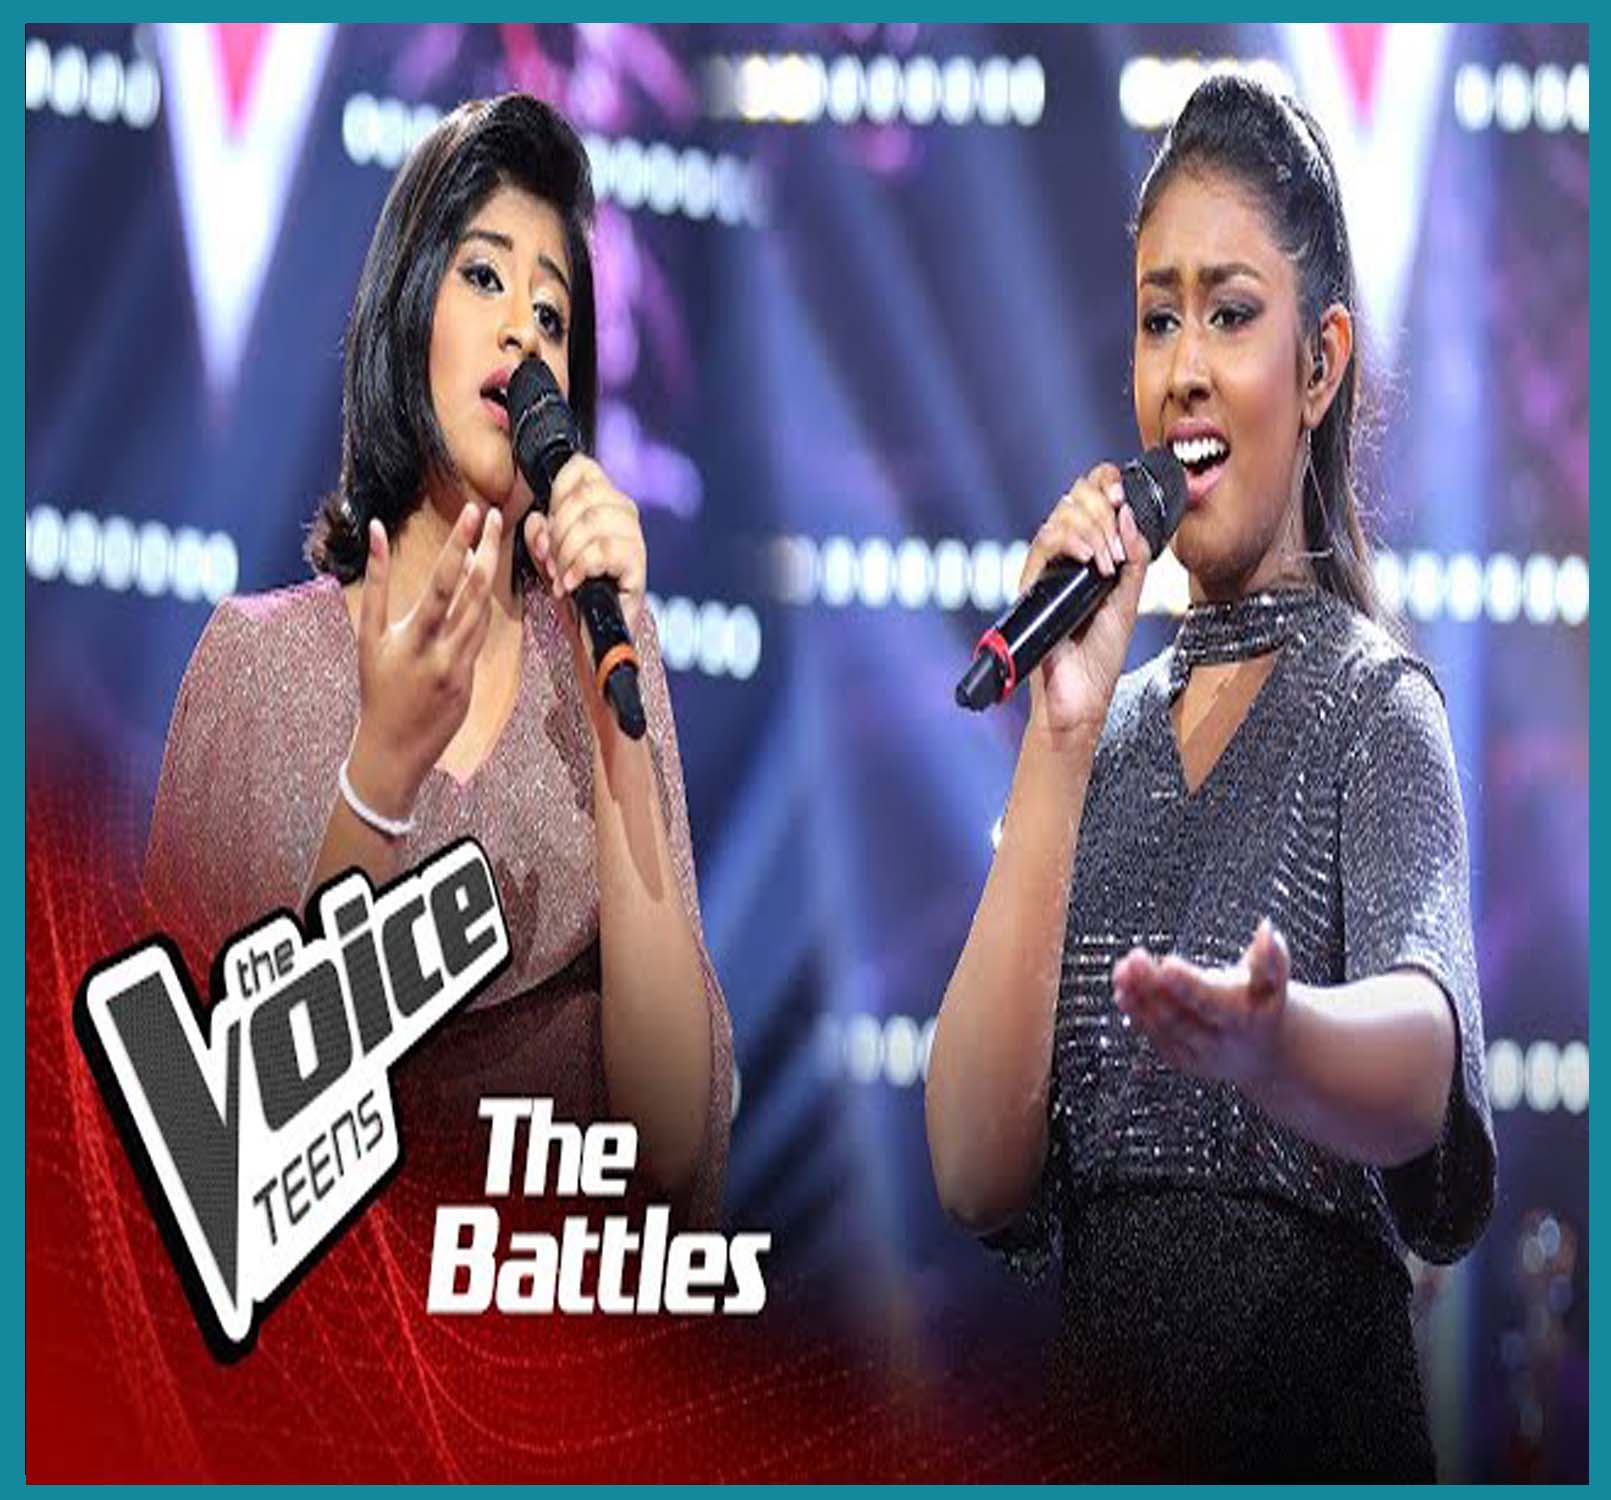 Thanha Asha (The Voice Teen Sri Lanka The Battles)